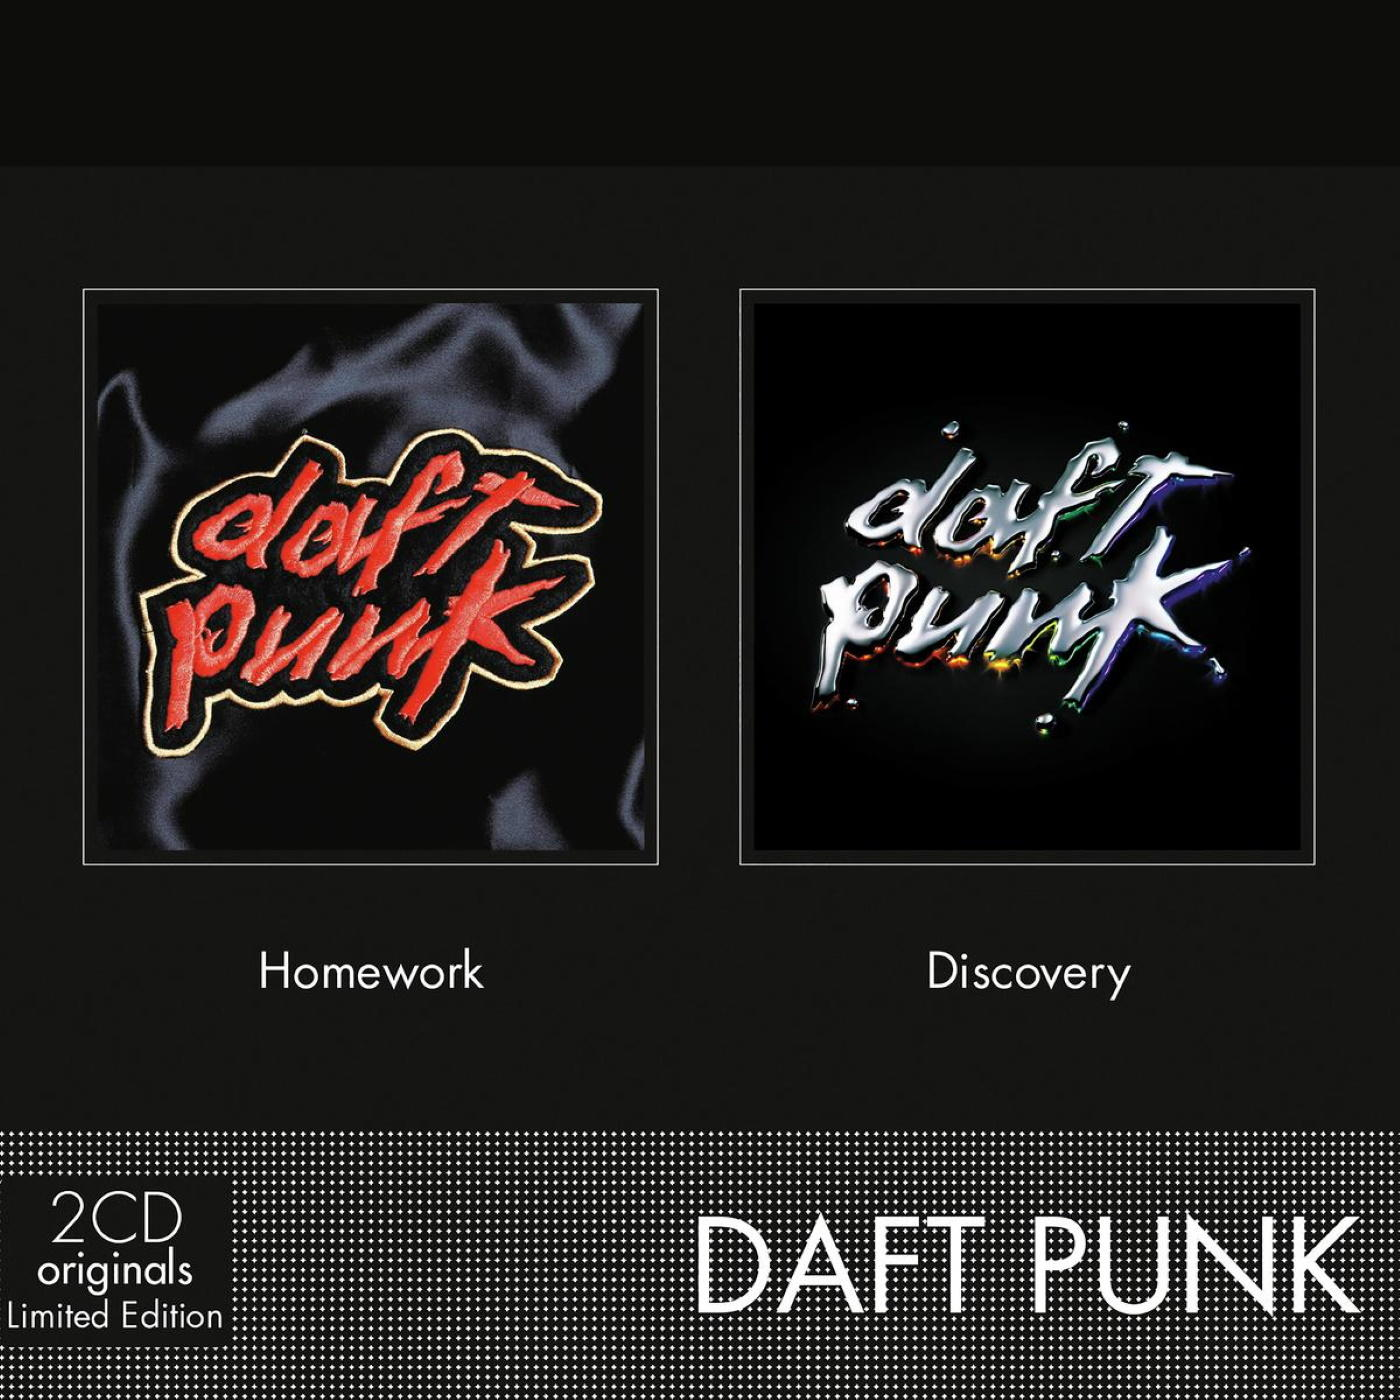 Punk - Daft (CD) Homework/Discovery -